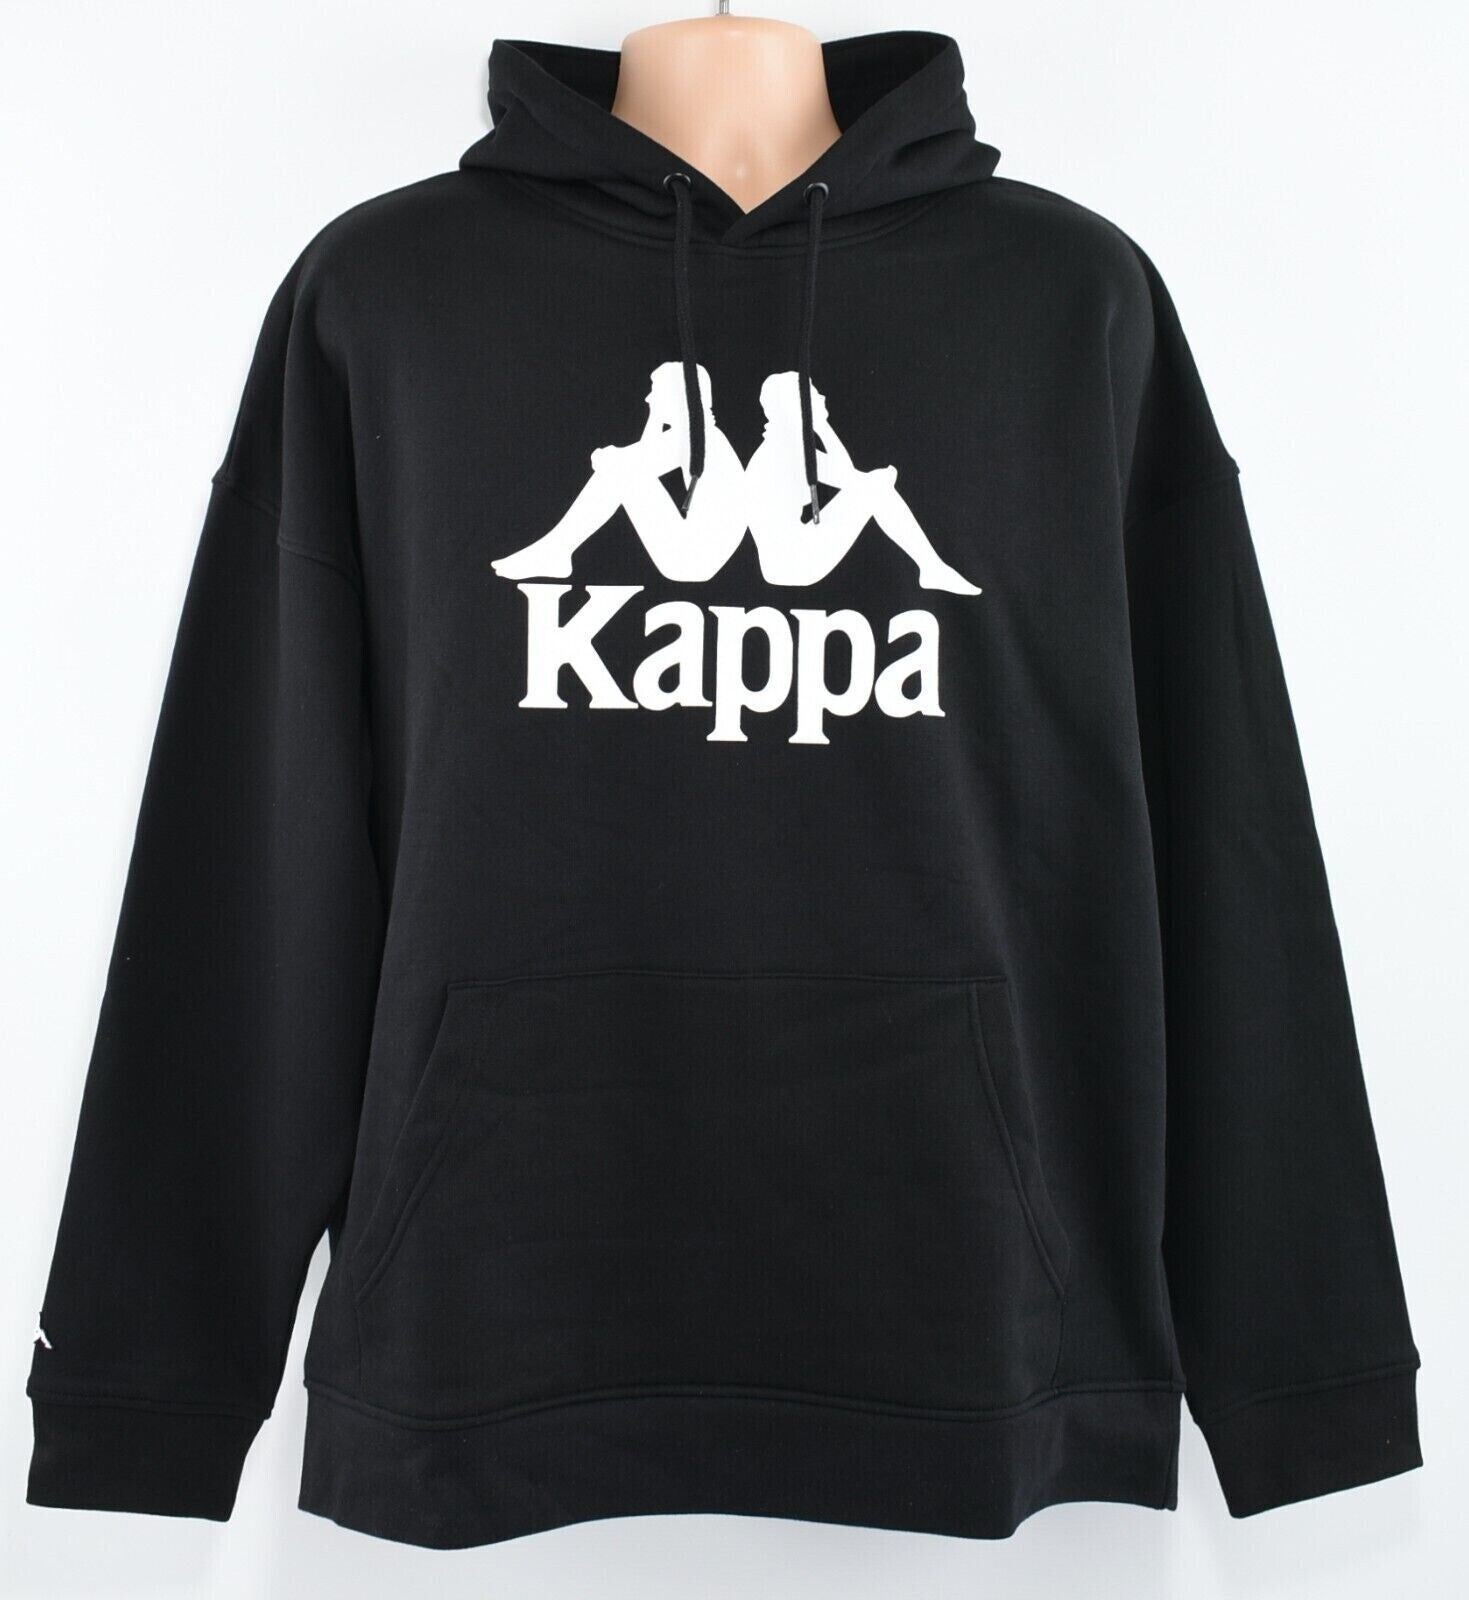 KAPPA Men's Oversized Hooded Sweatshirt, Hoodie, Black with White Logo, size L